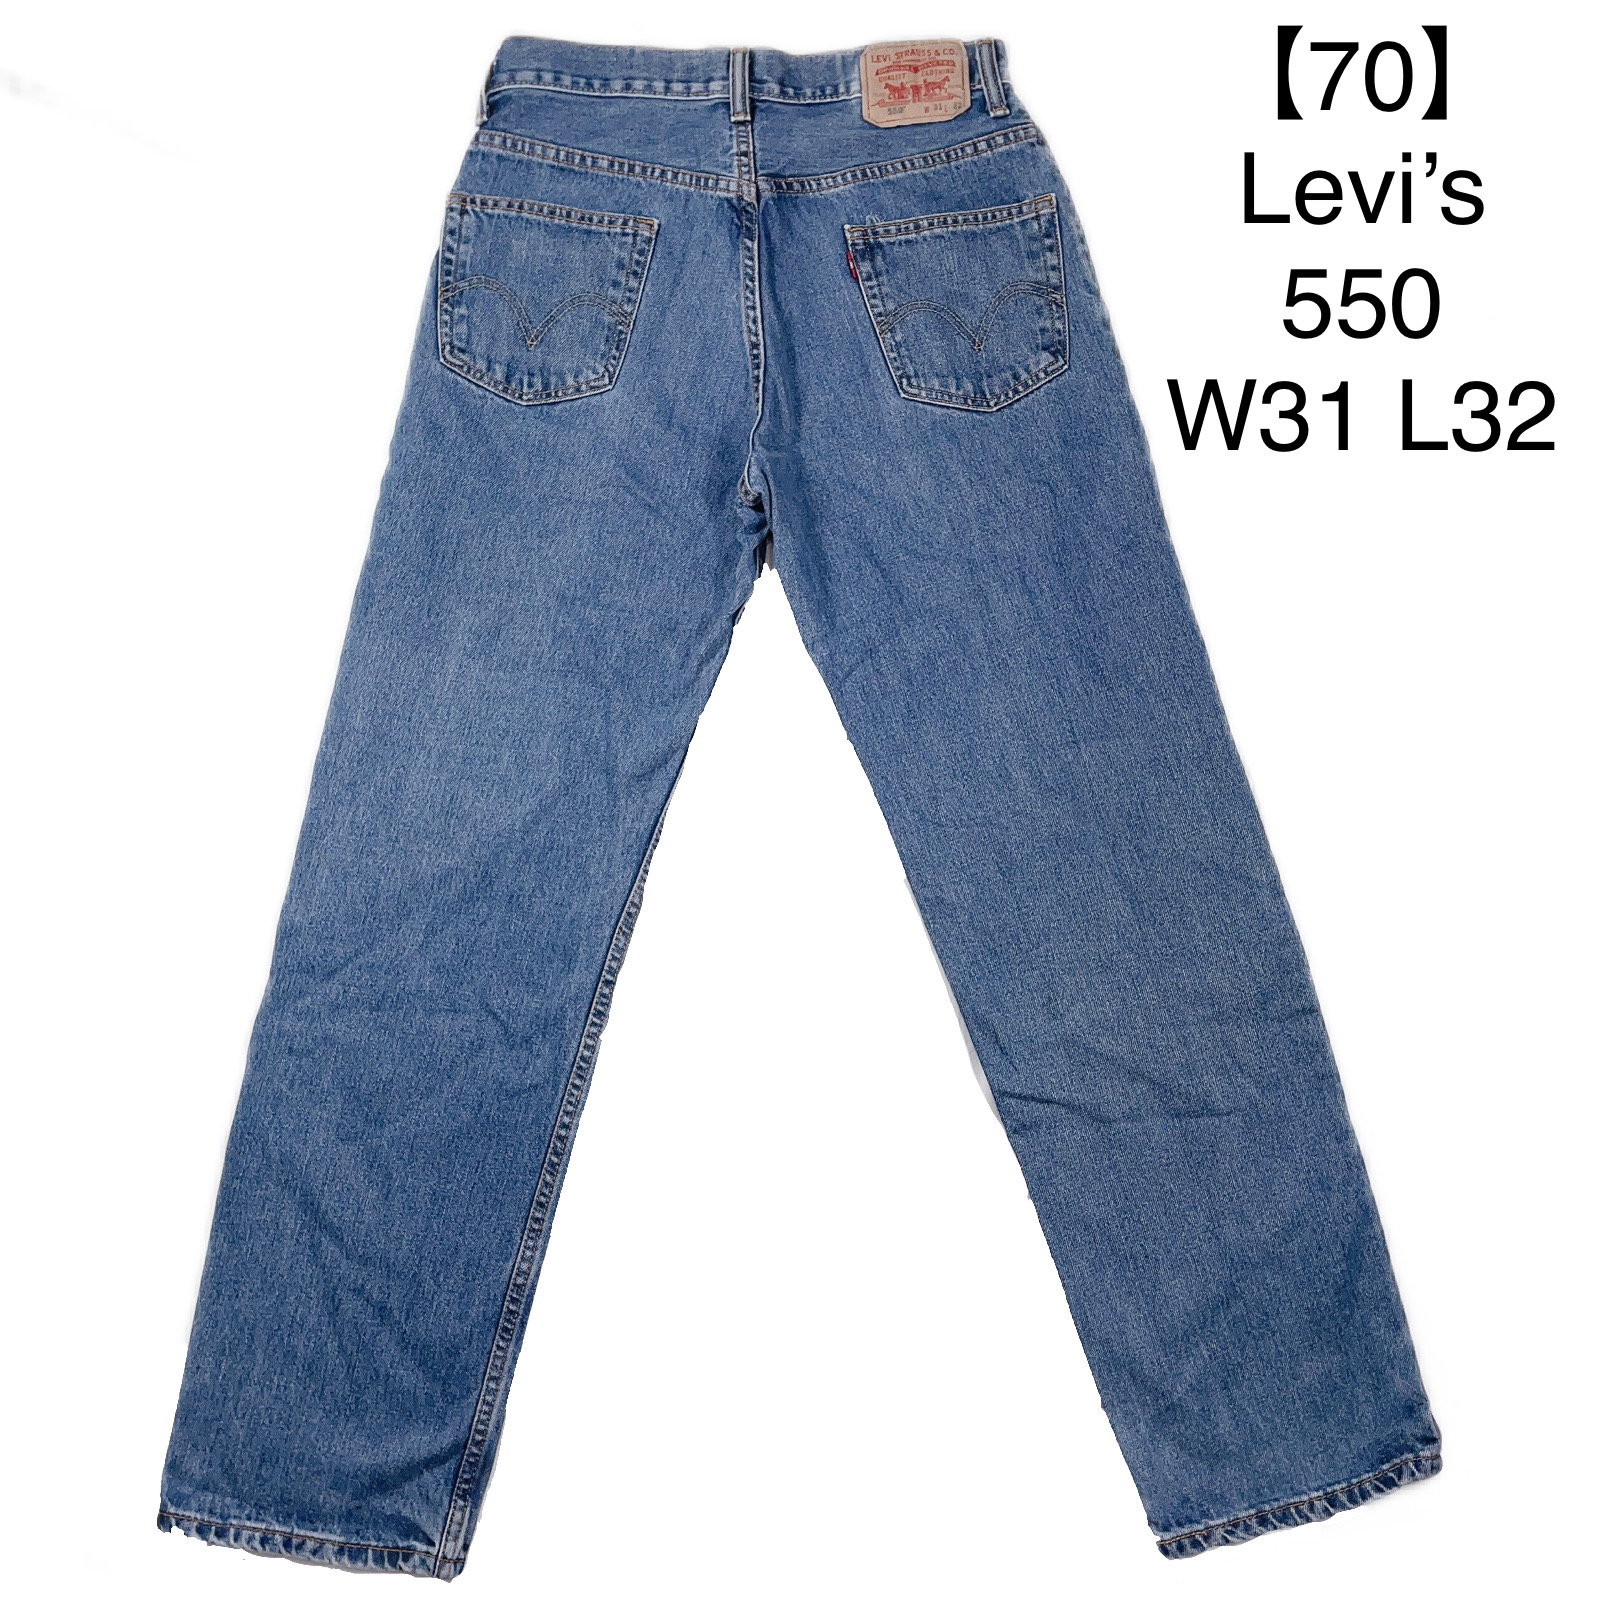 85】W31 L32 Levi's 501XX denim pants リーバイス ダブルエックス